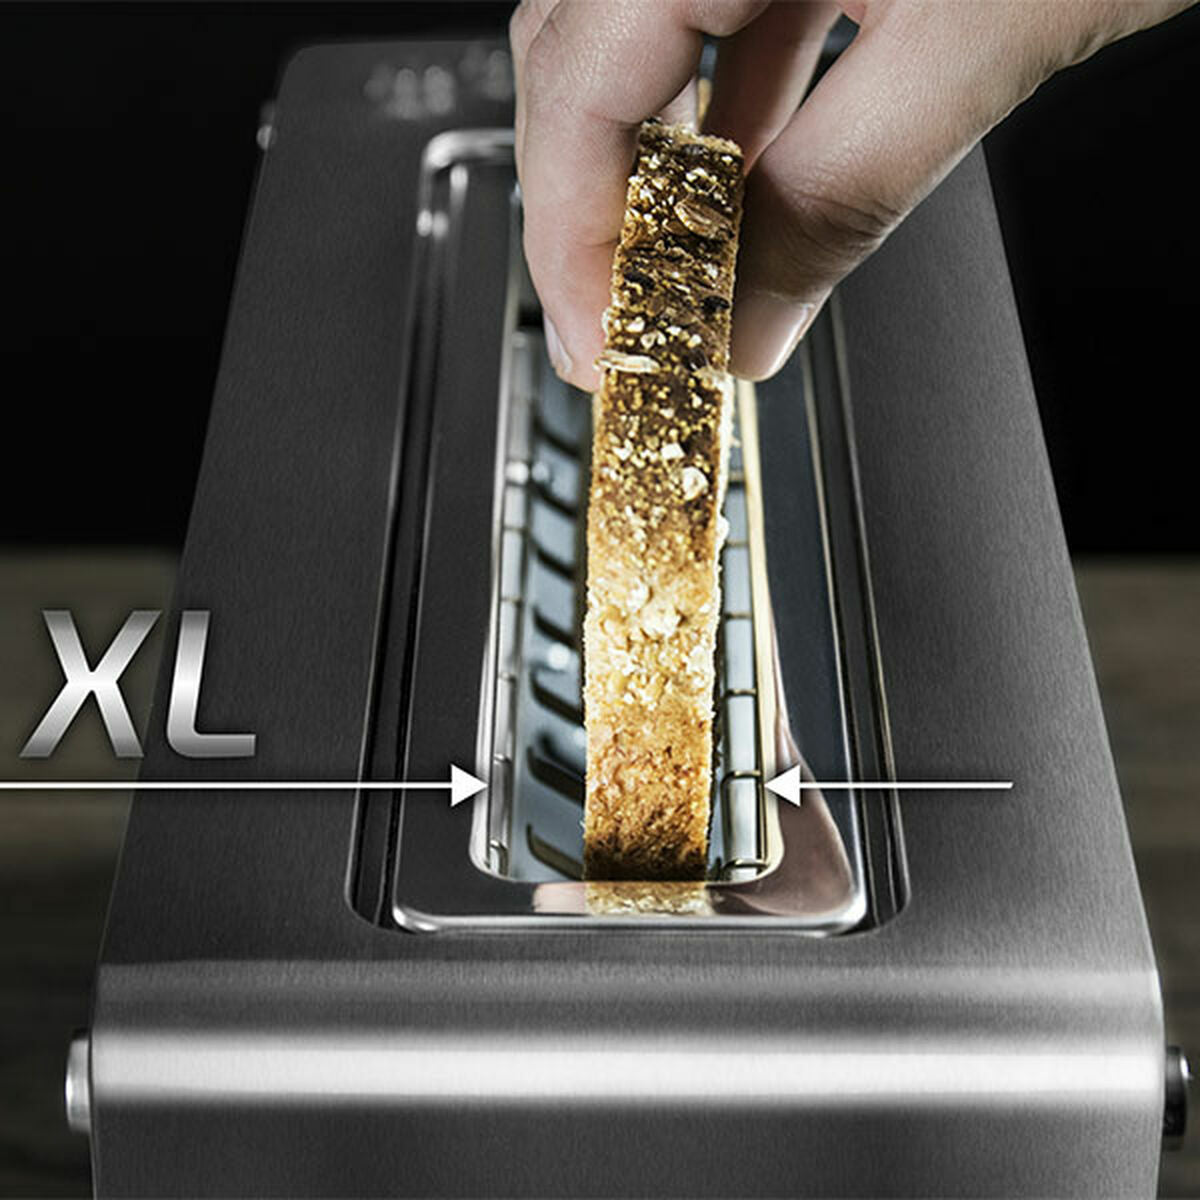 Toaster Cecomix VisionToast - CA International 